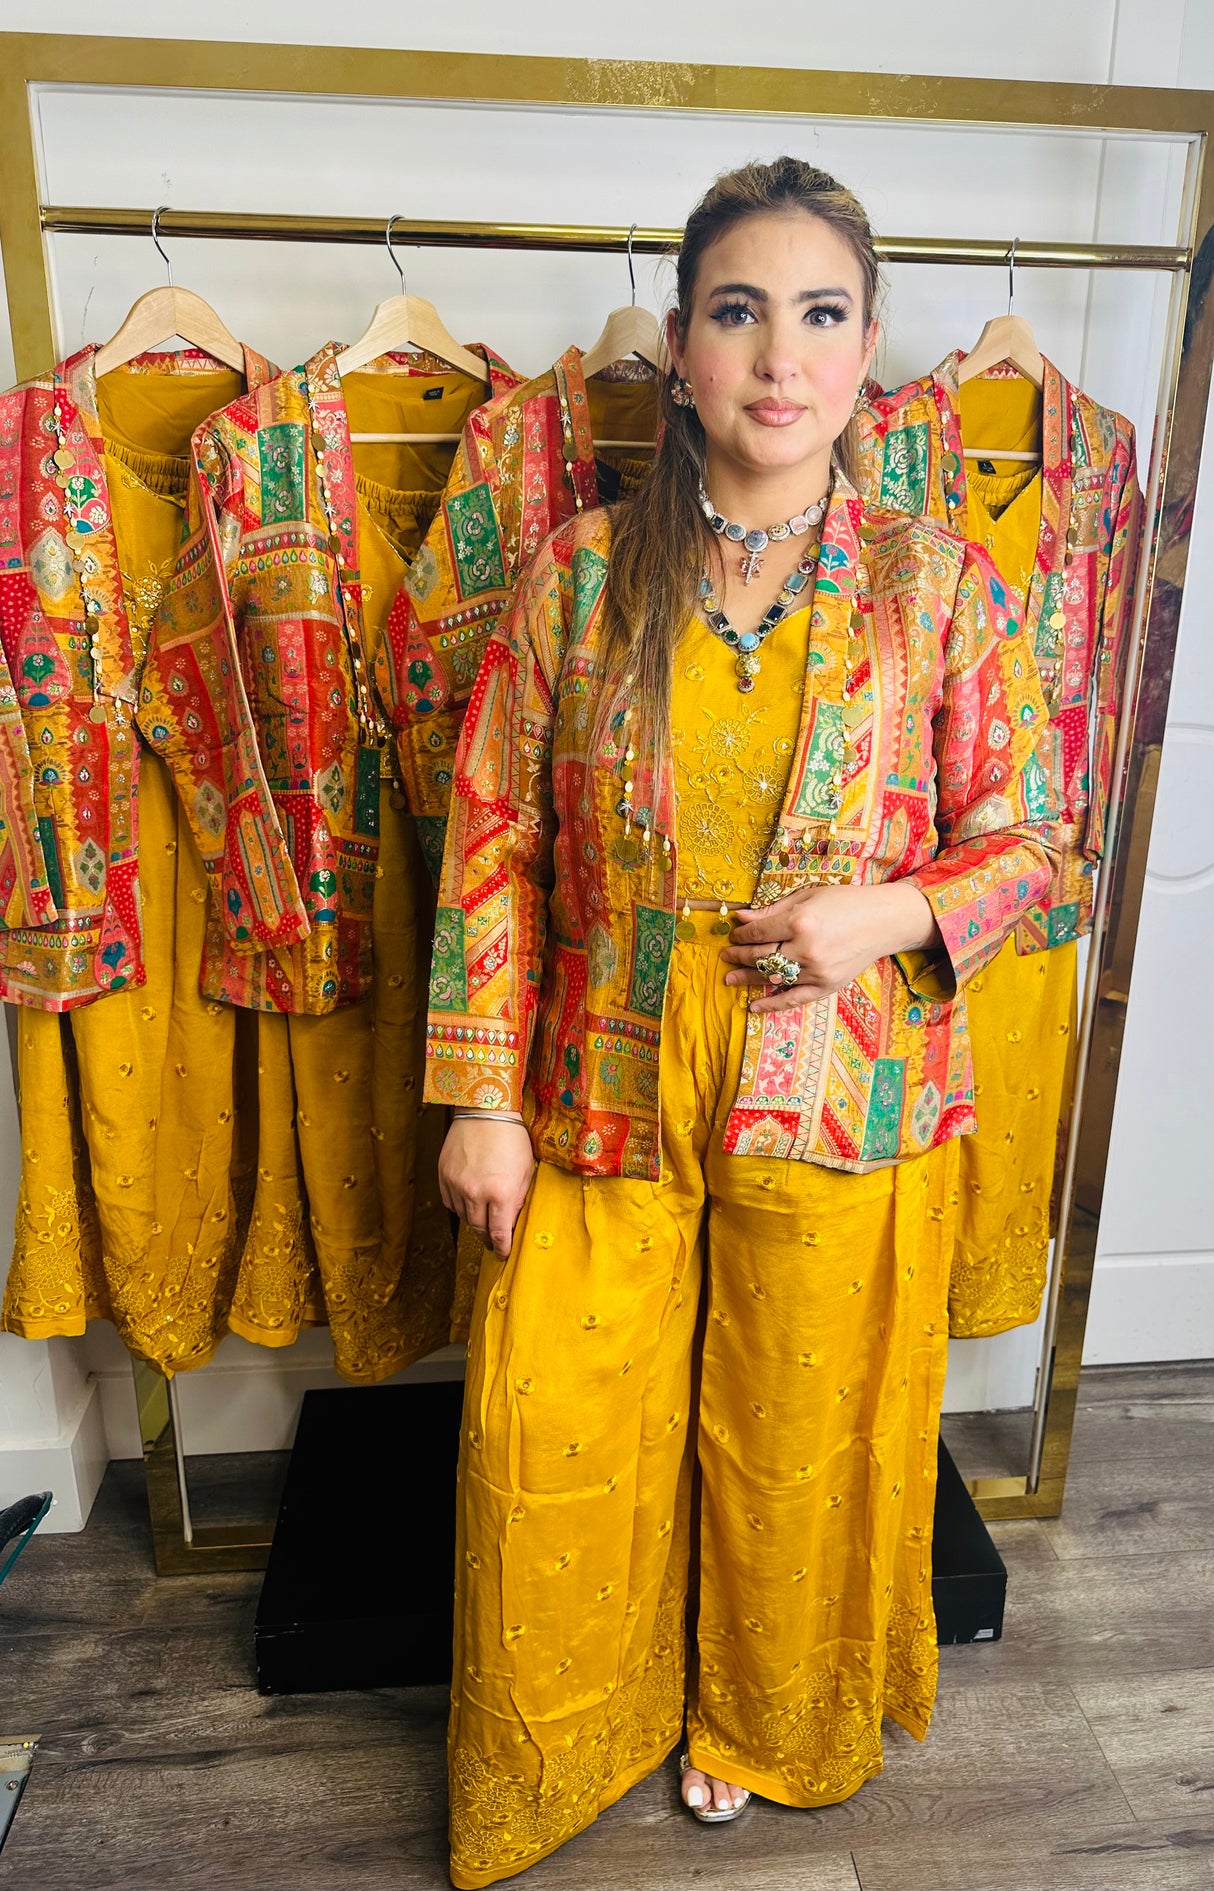 Marigold fusion dress